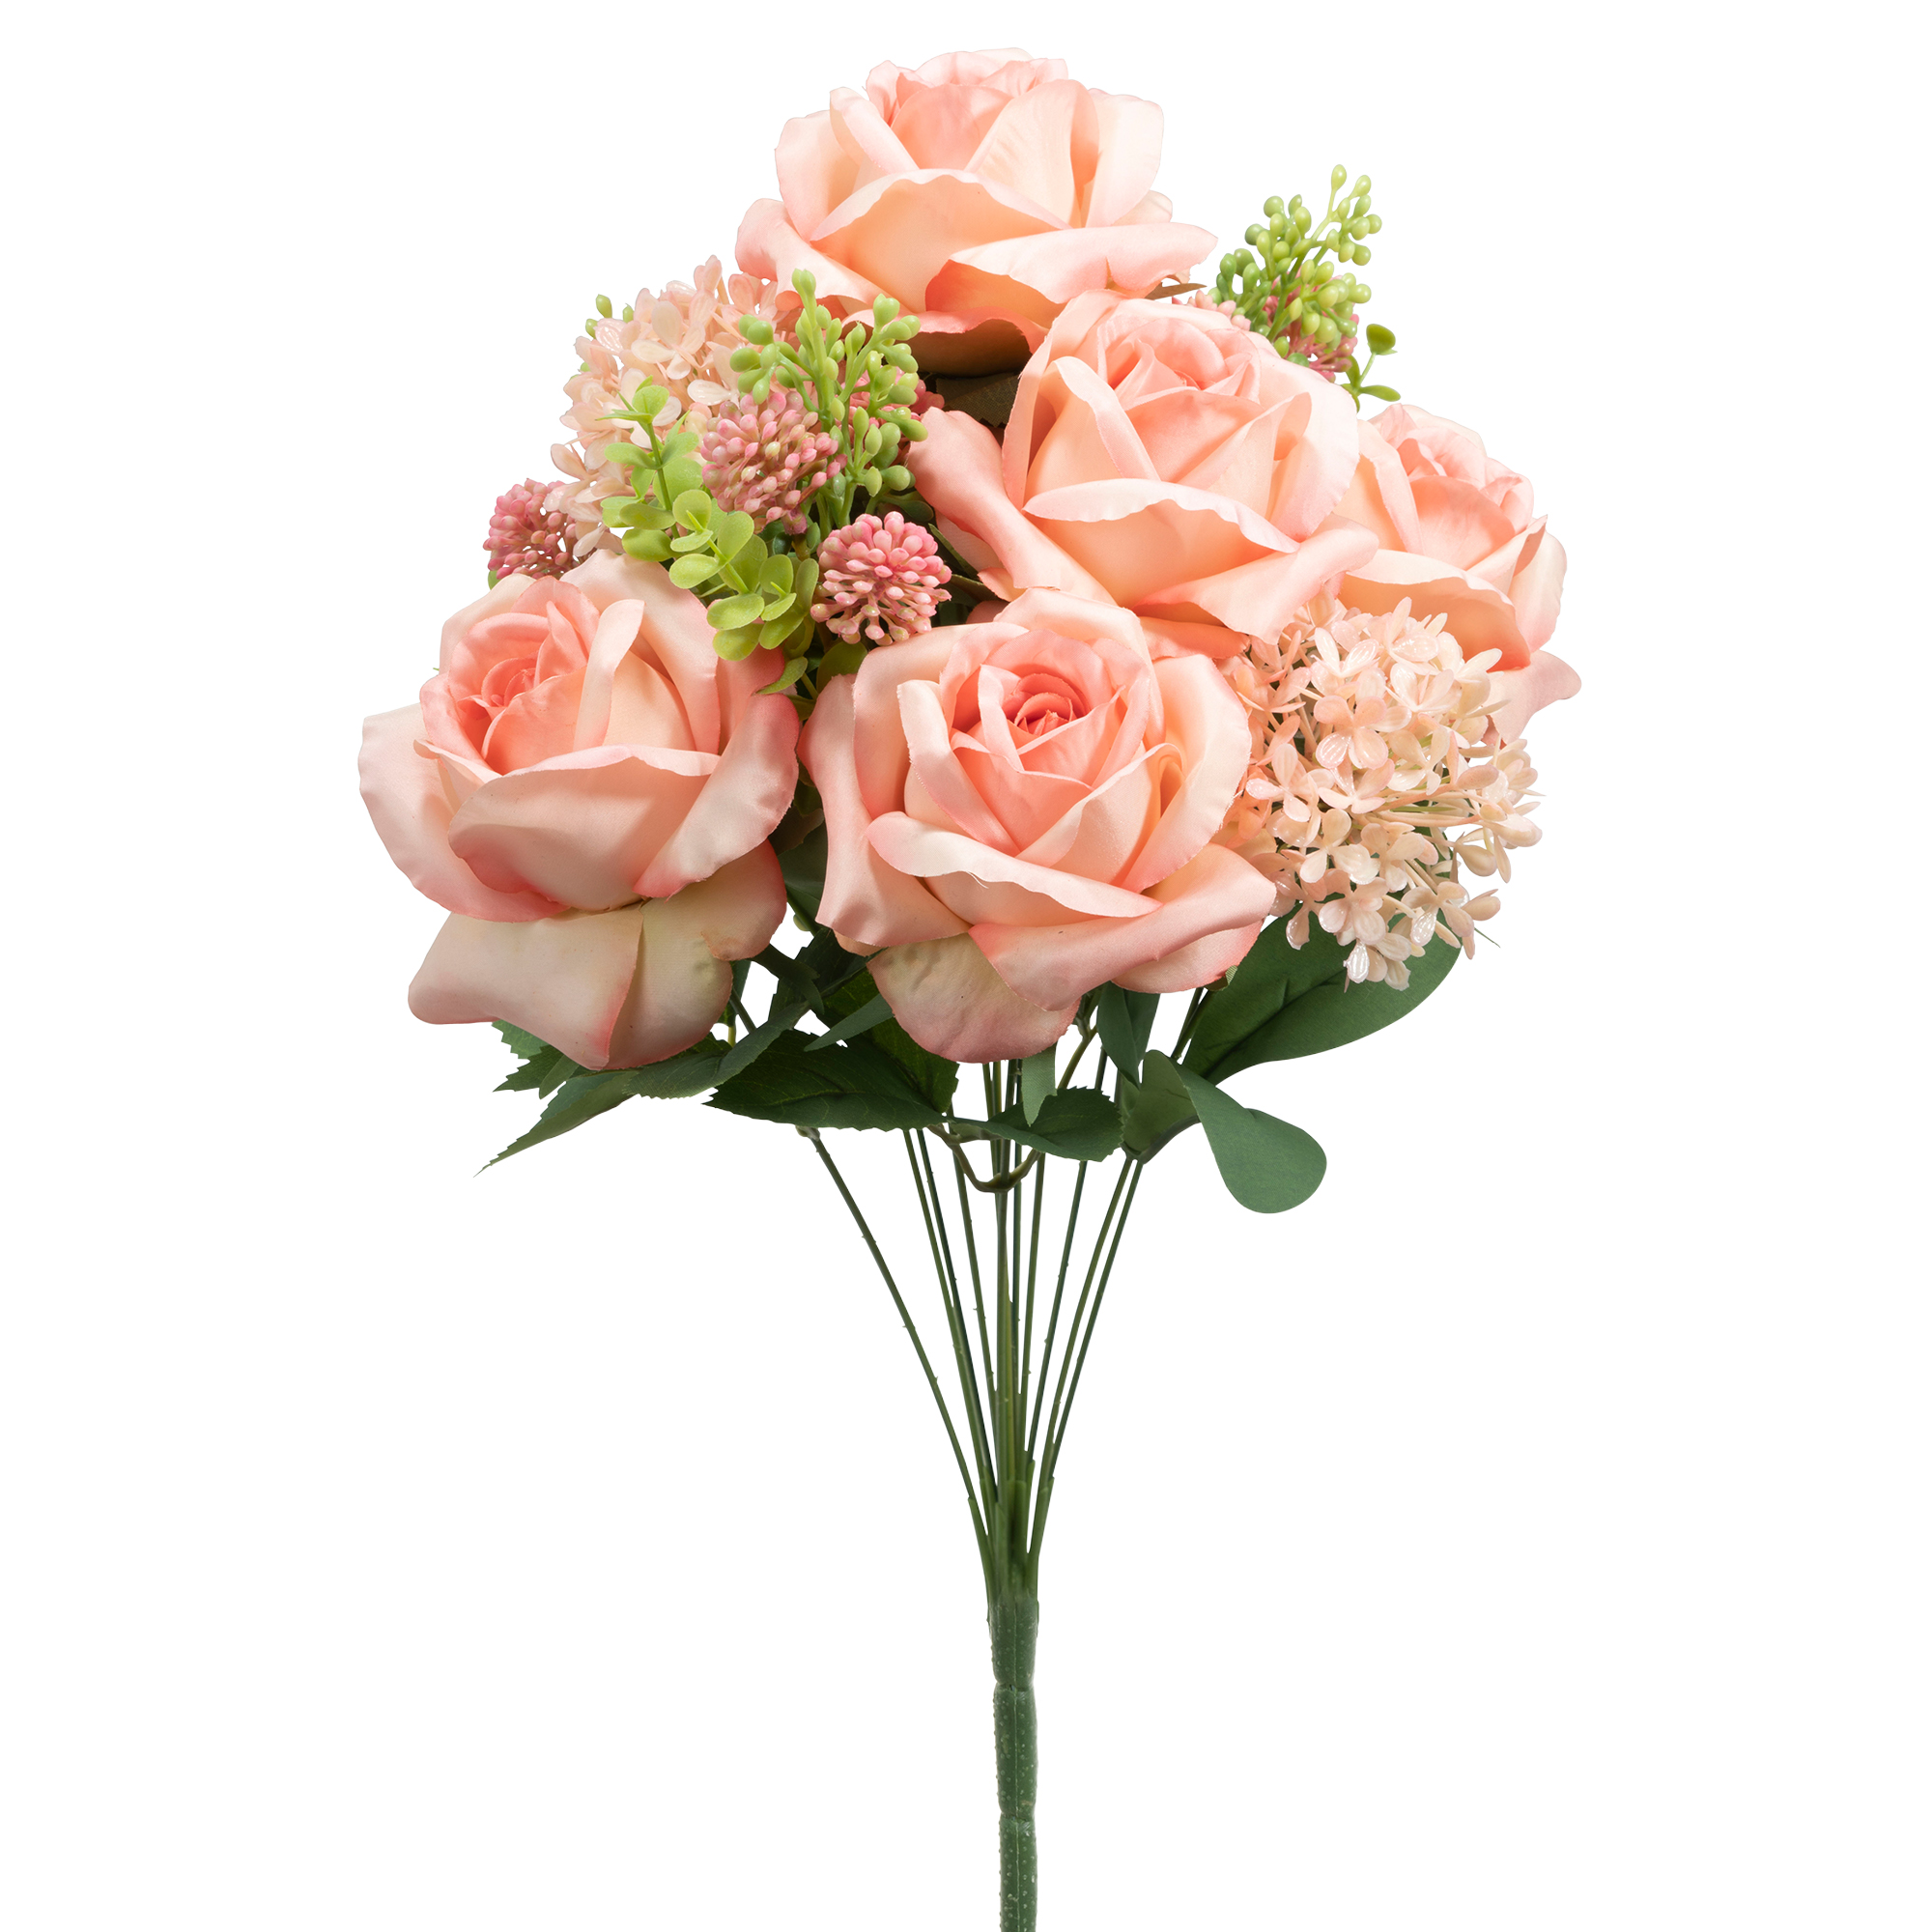 12 Head Bulgarian Rose And Snow Ball Hydrangea Bush 19" - Pink